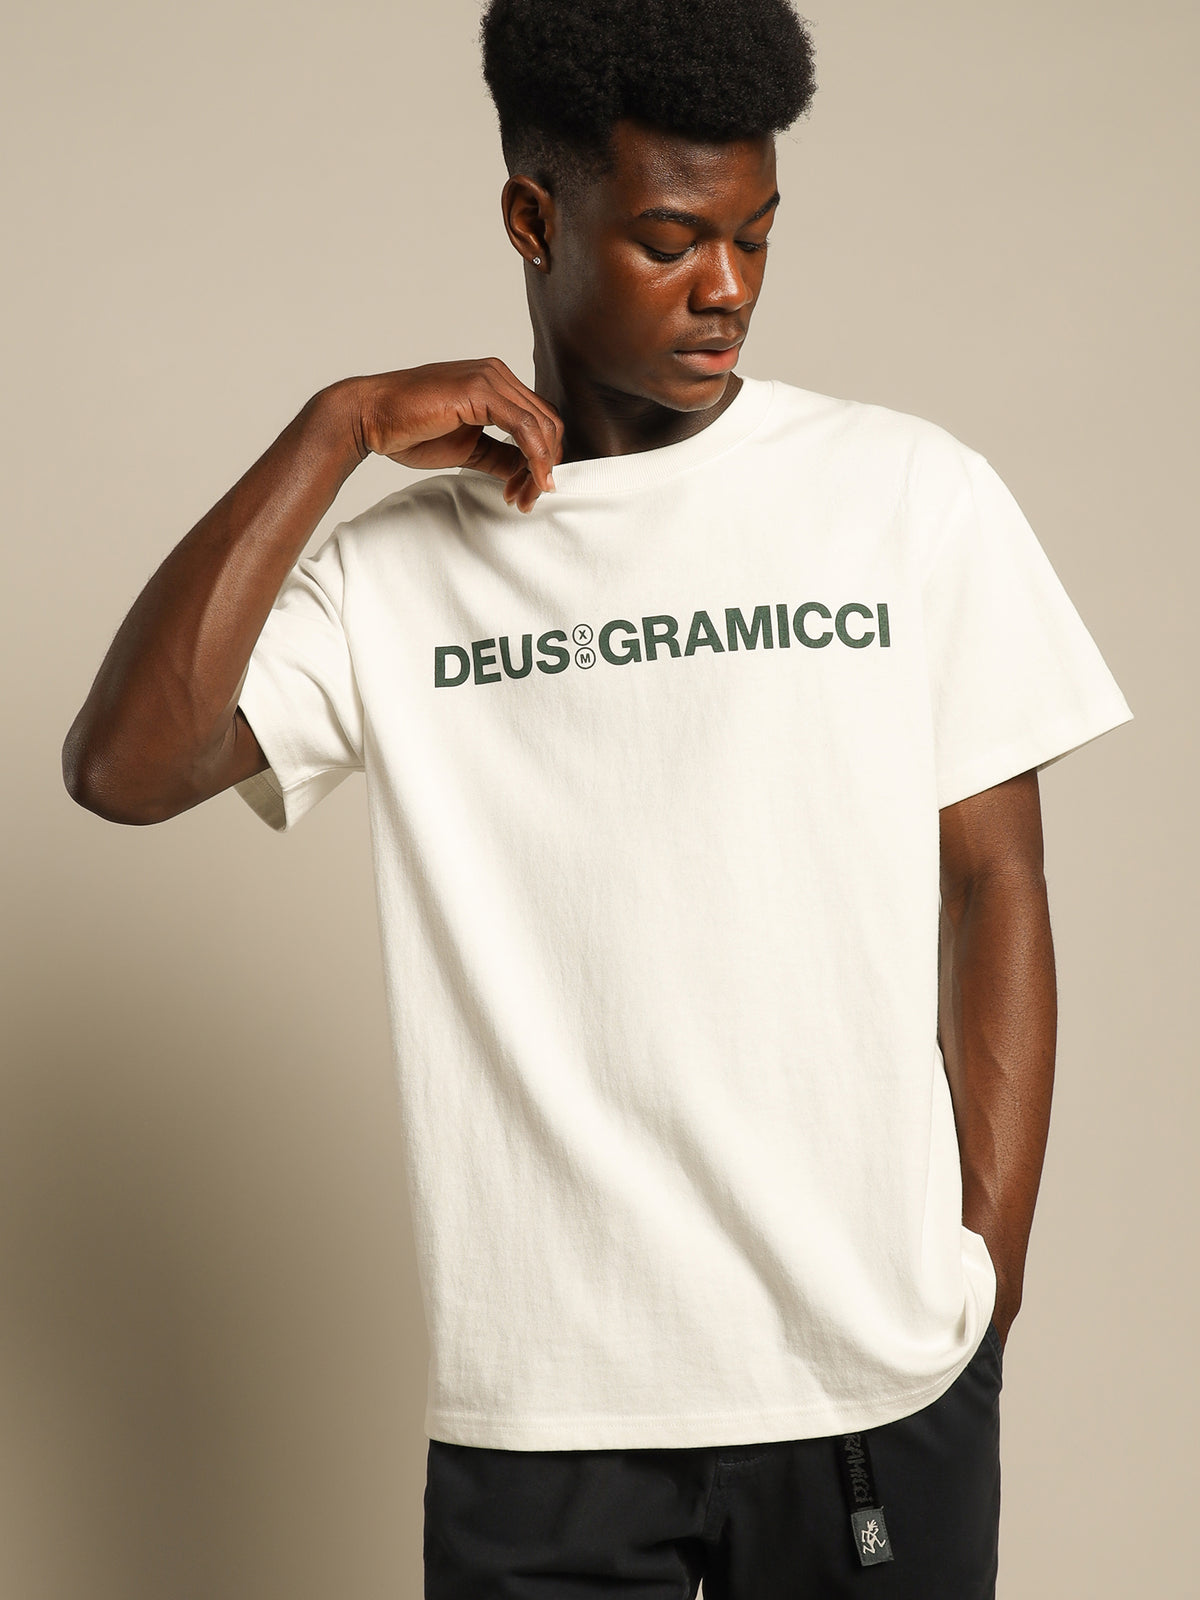 Gramicci x Deus Left Again T-Shirt in White